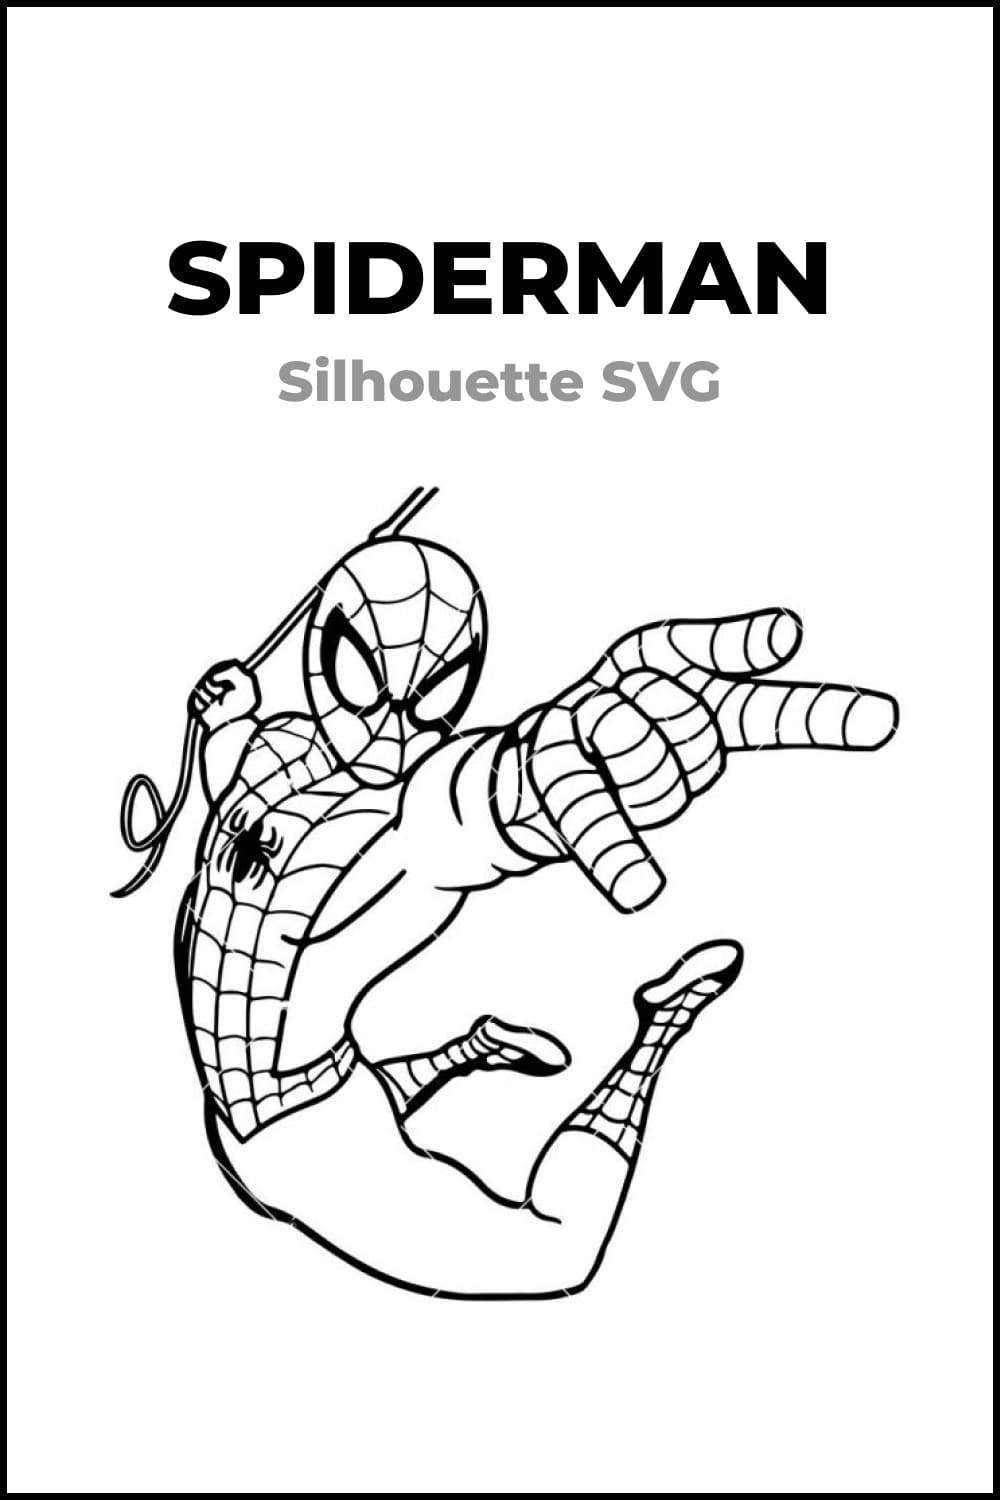 Spiderman silhouette in flight.